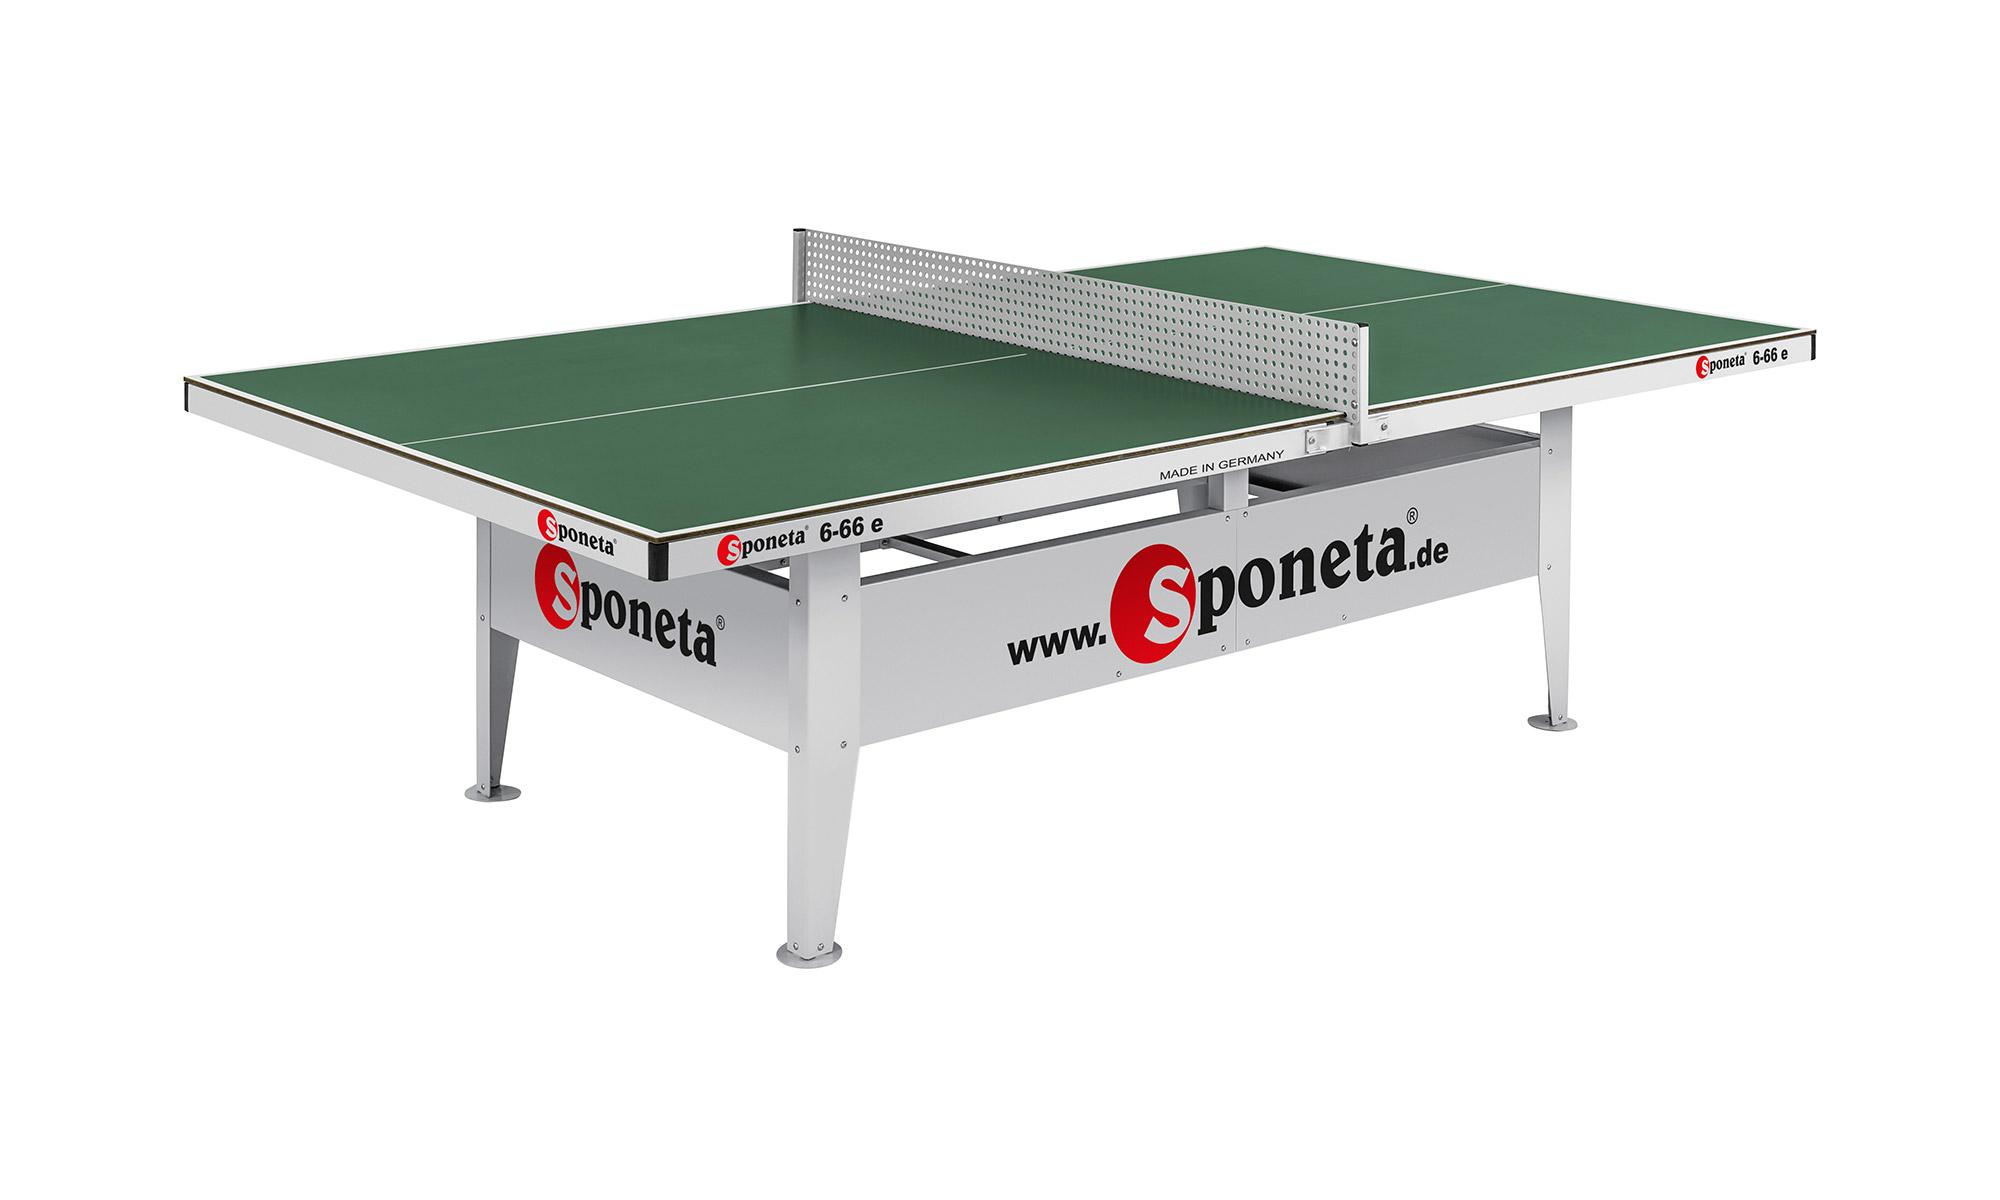 Sponeta Activeline Outdoor Green table tennis table